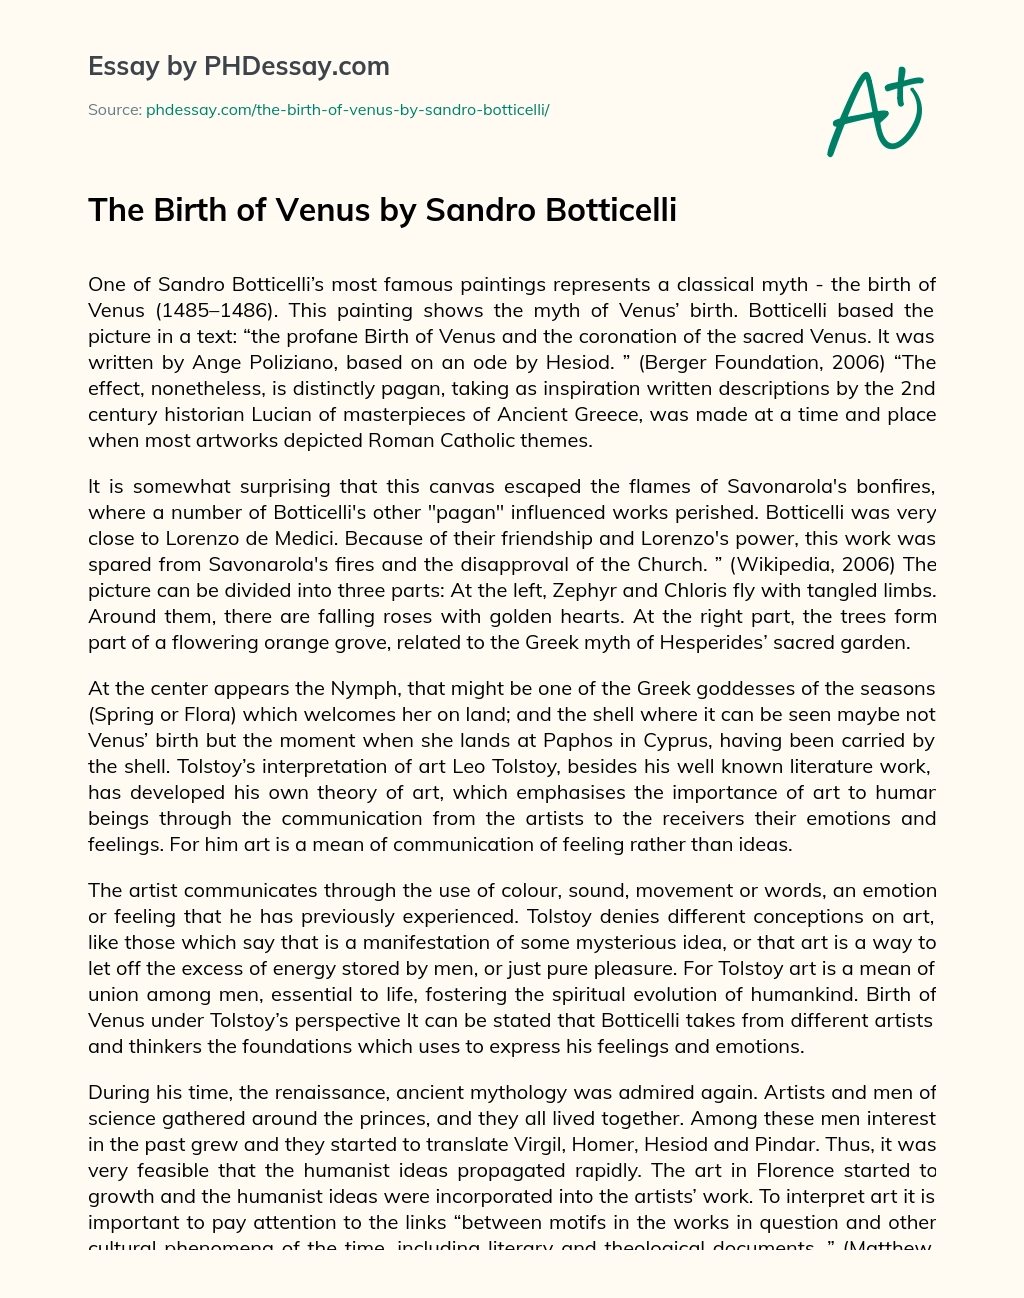 The Birth of Venus by Sandro Botticelli essay